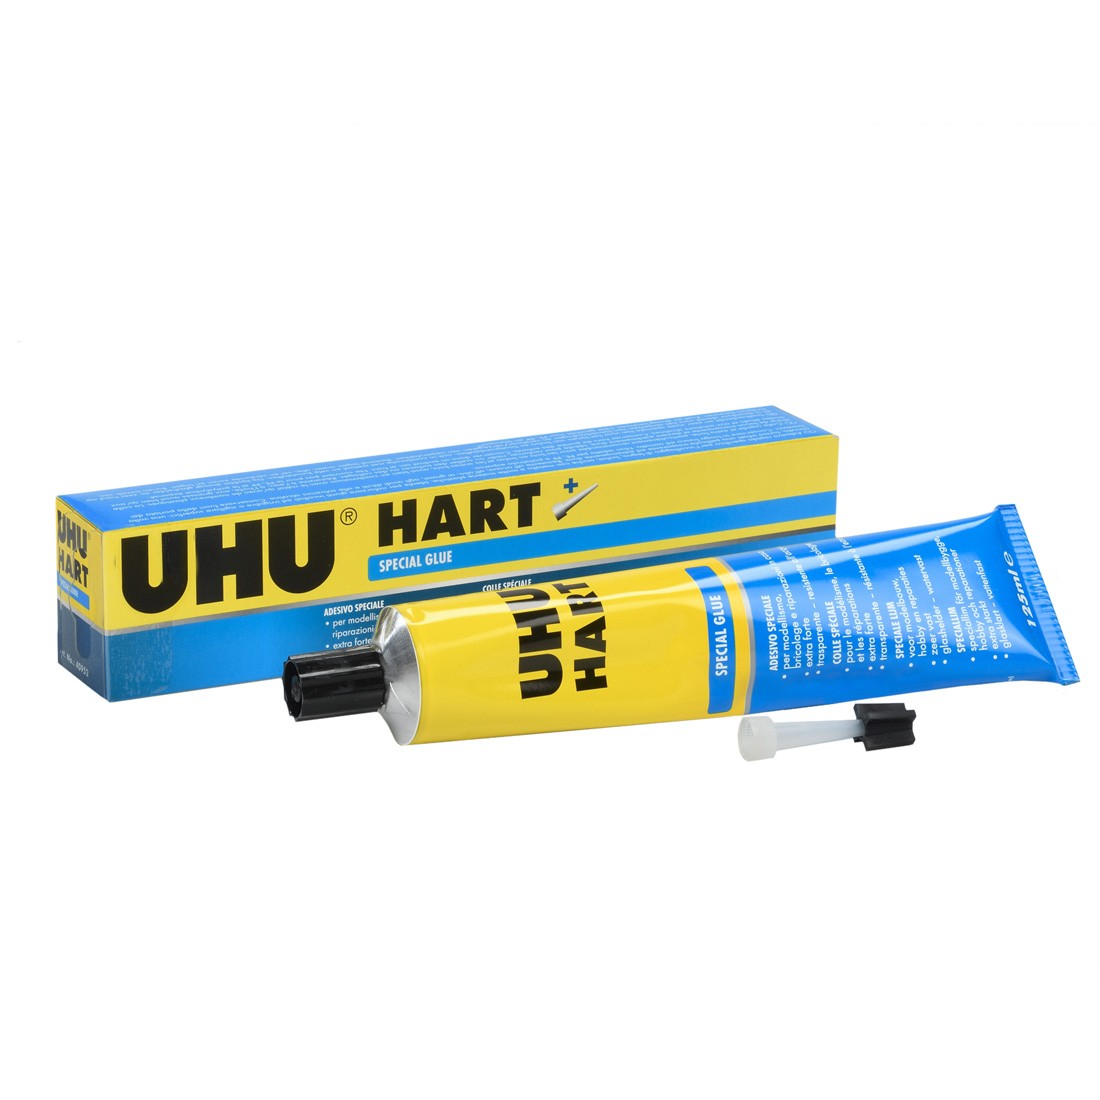 Colle UHU Hart ml.125